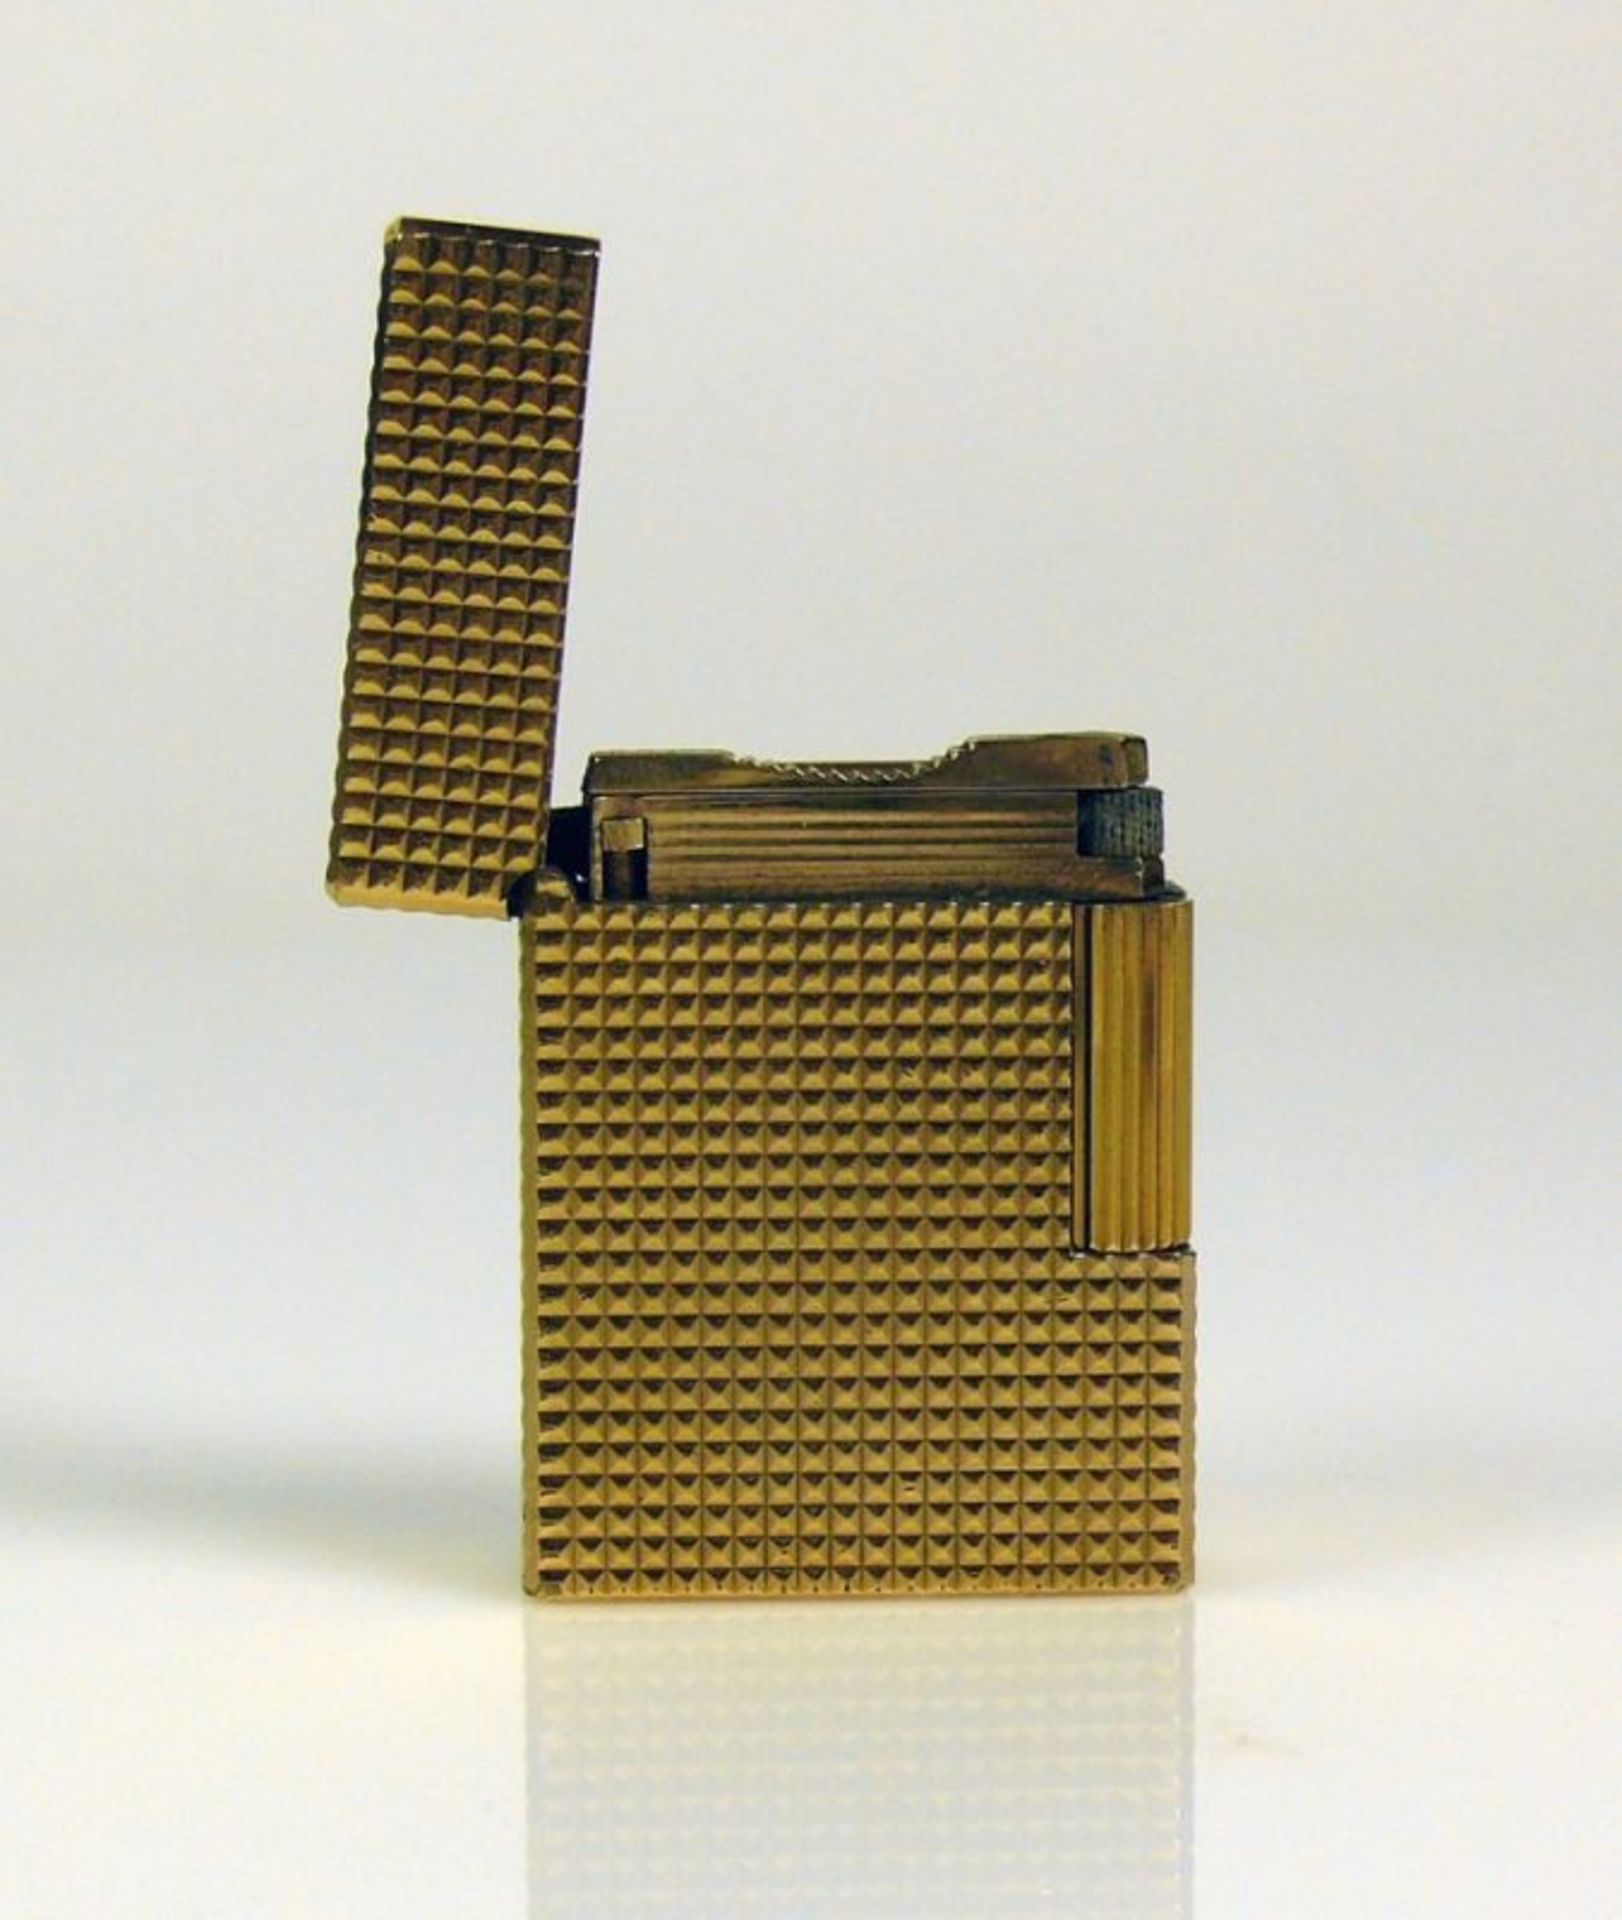 DUPONT-Feuerzeug Damenmodell; verg.; 4,5 x 3,5 x 1,5 cm - Bild 2 aus 6